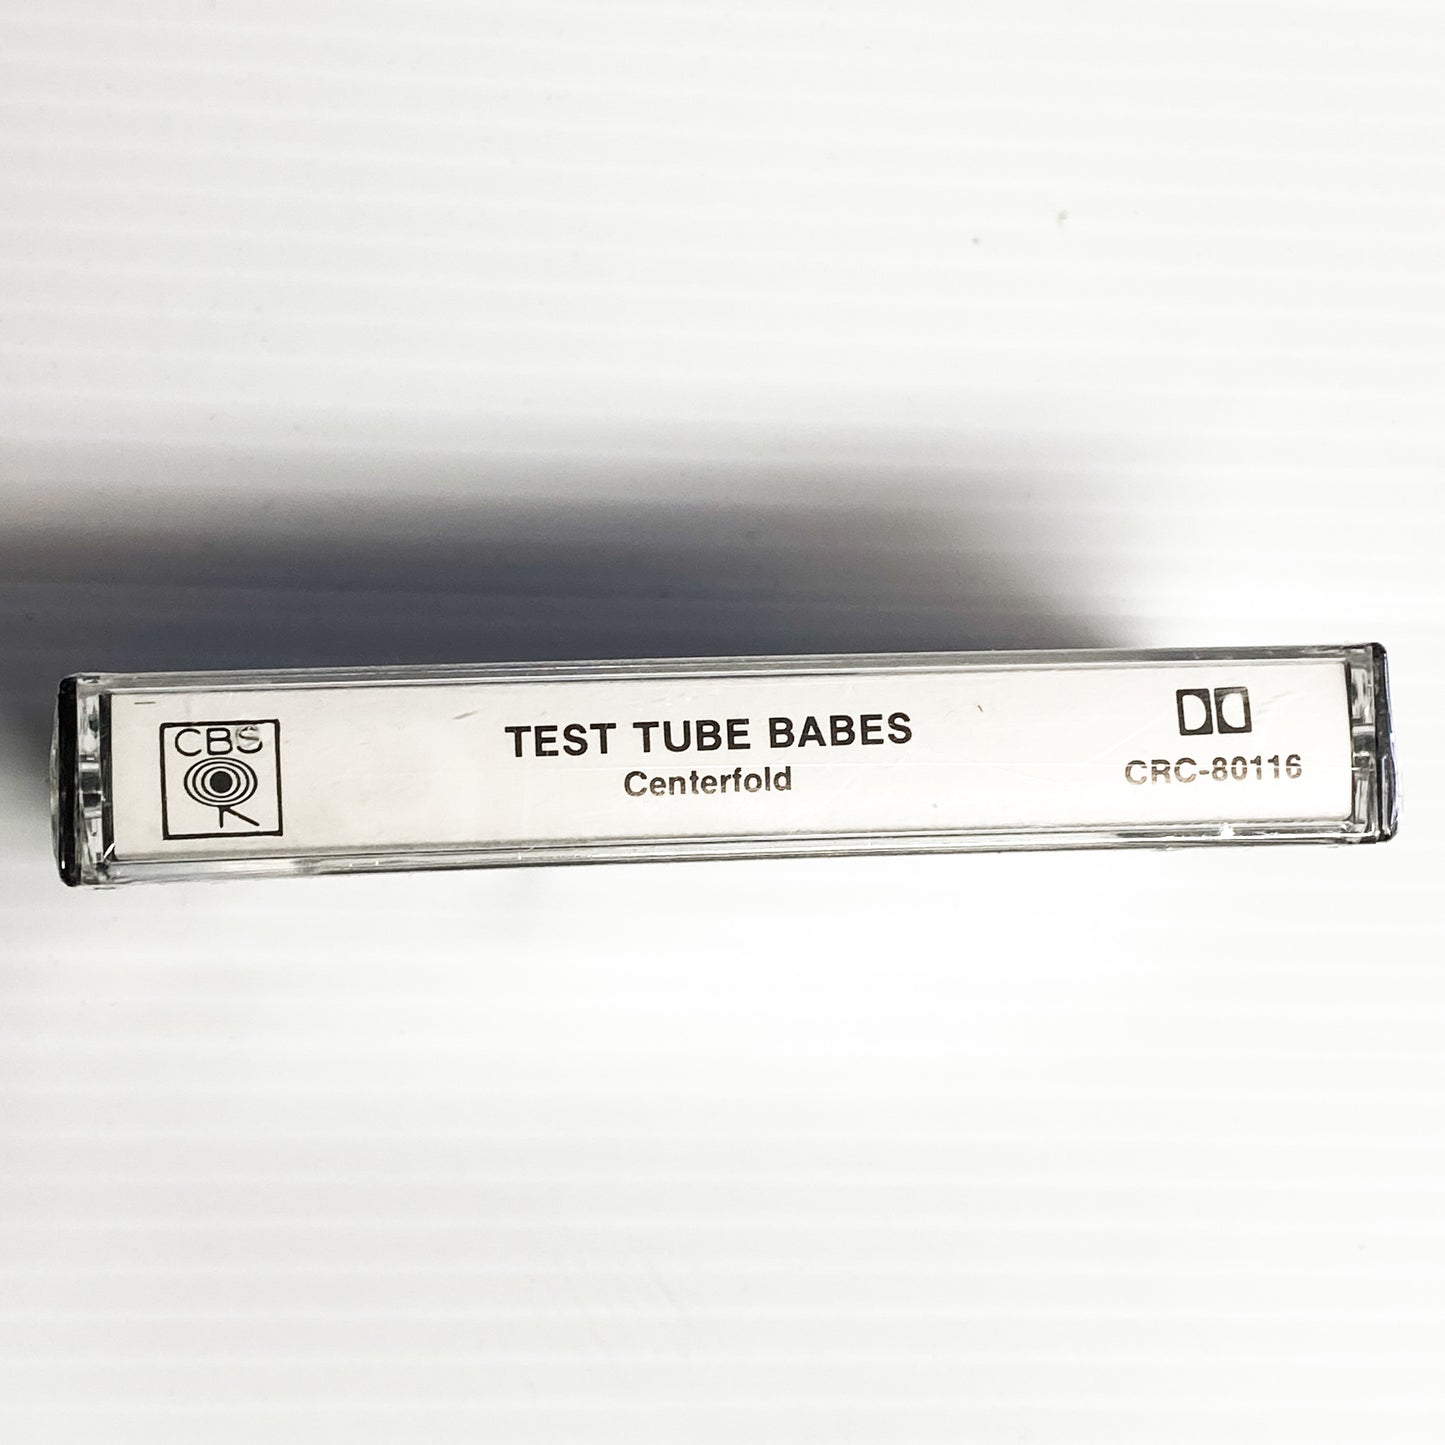 Test Tube Babes - Página central (casete)